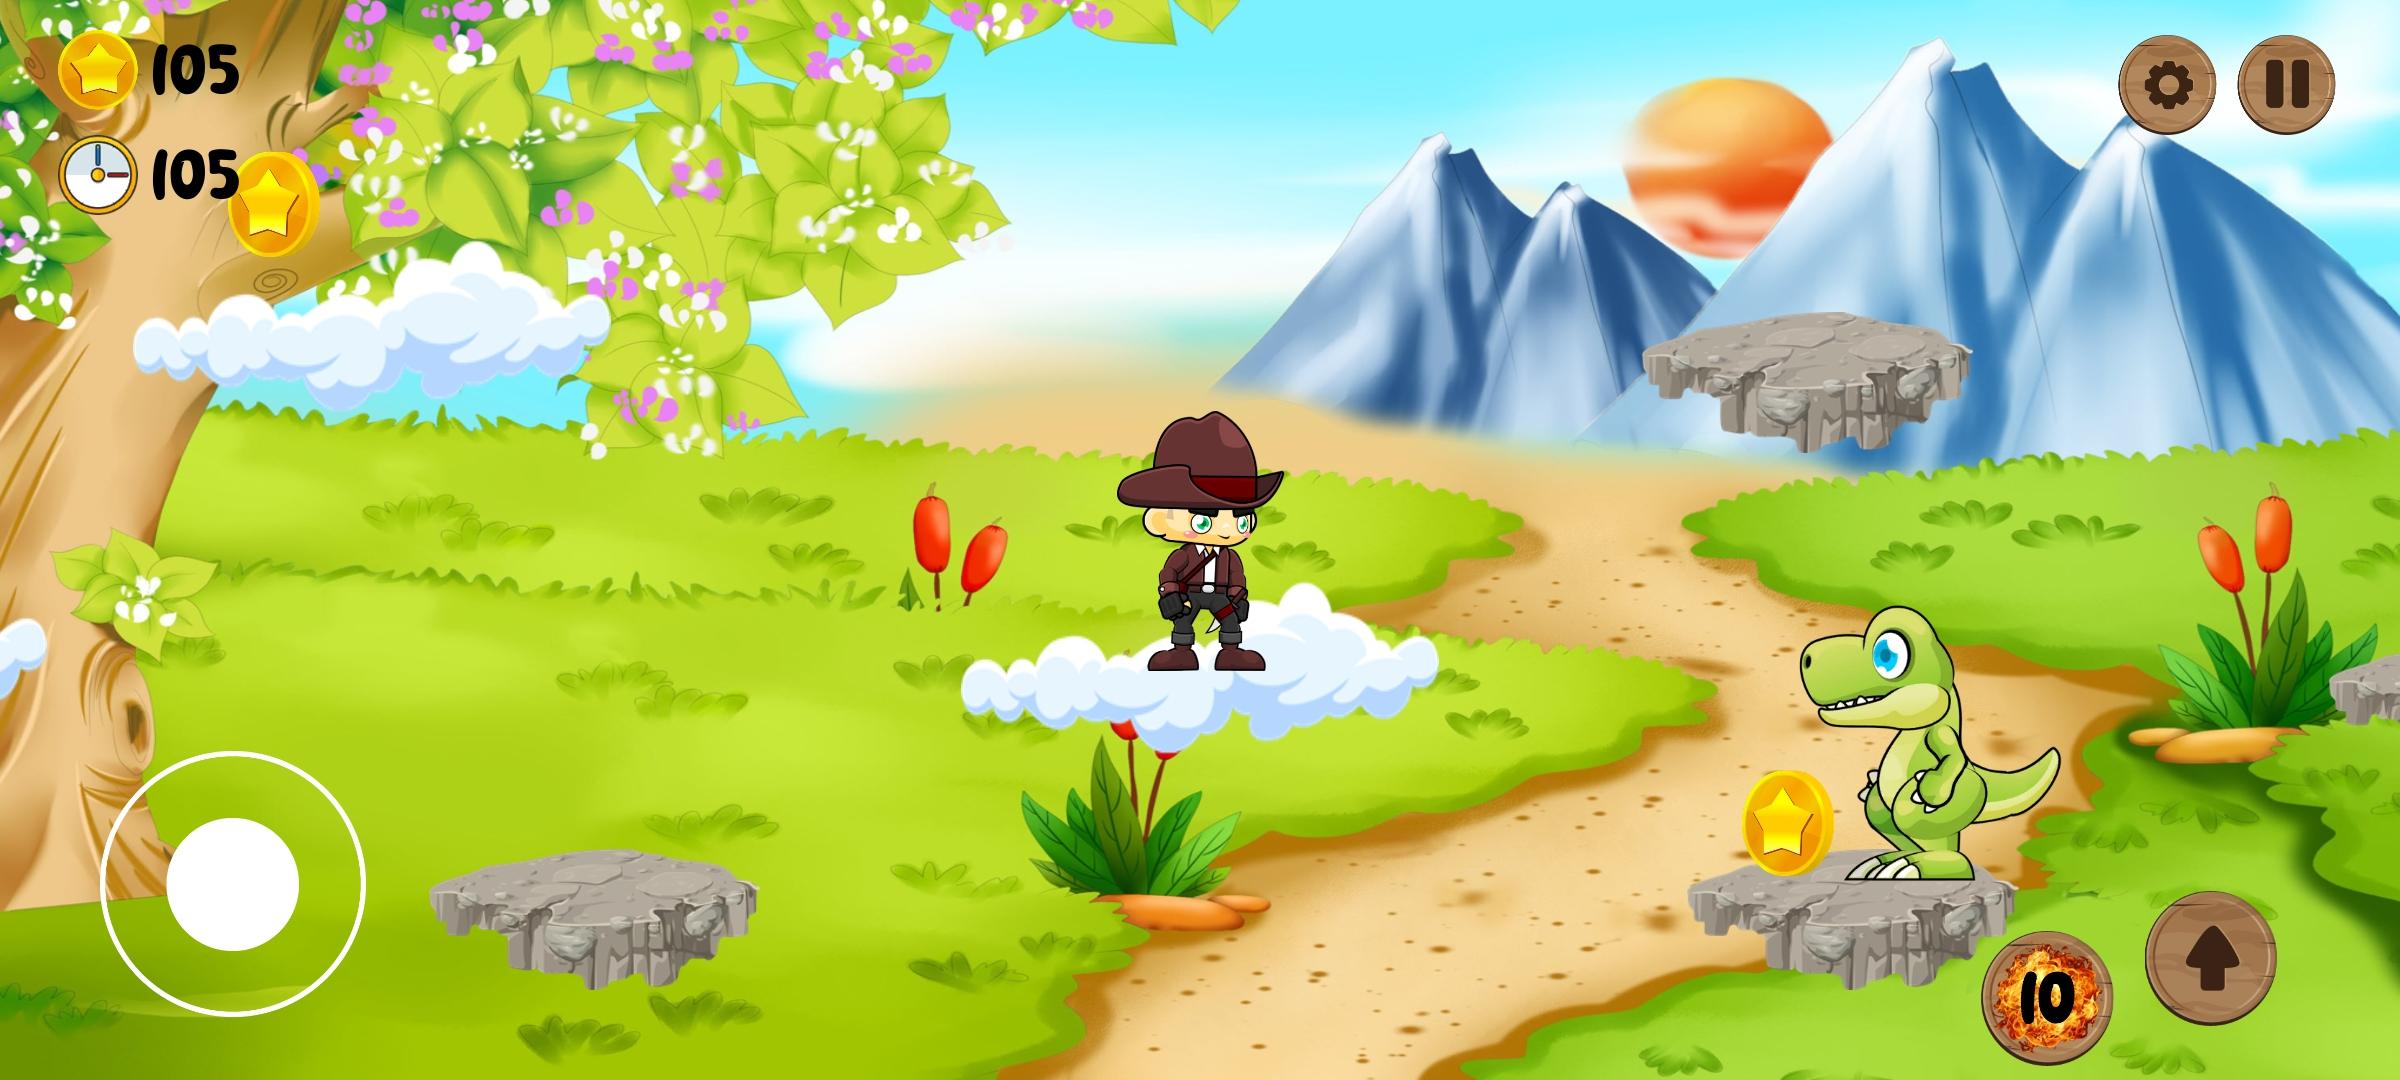 RFG - Adventure Boy 1.6 Screenshot 3